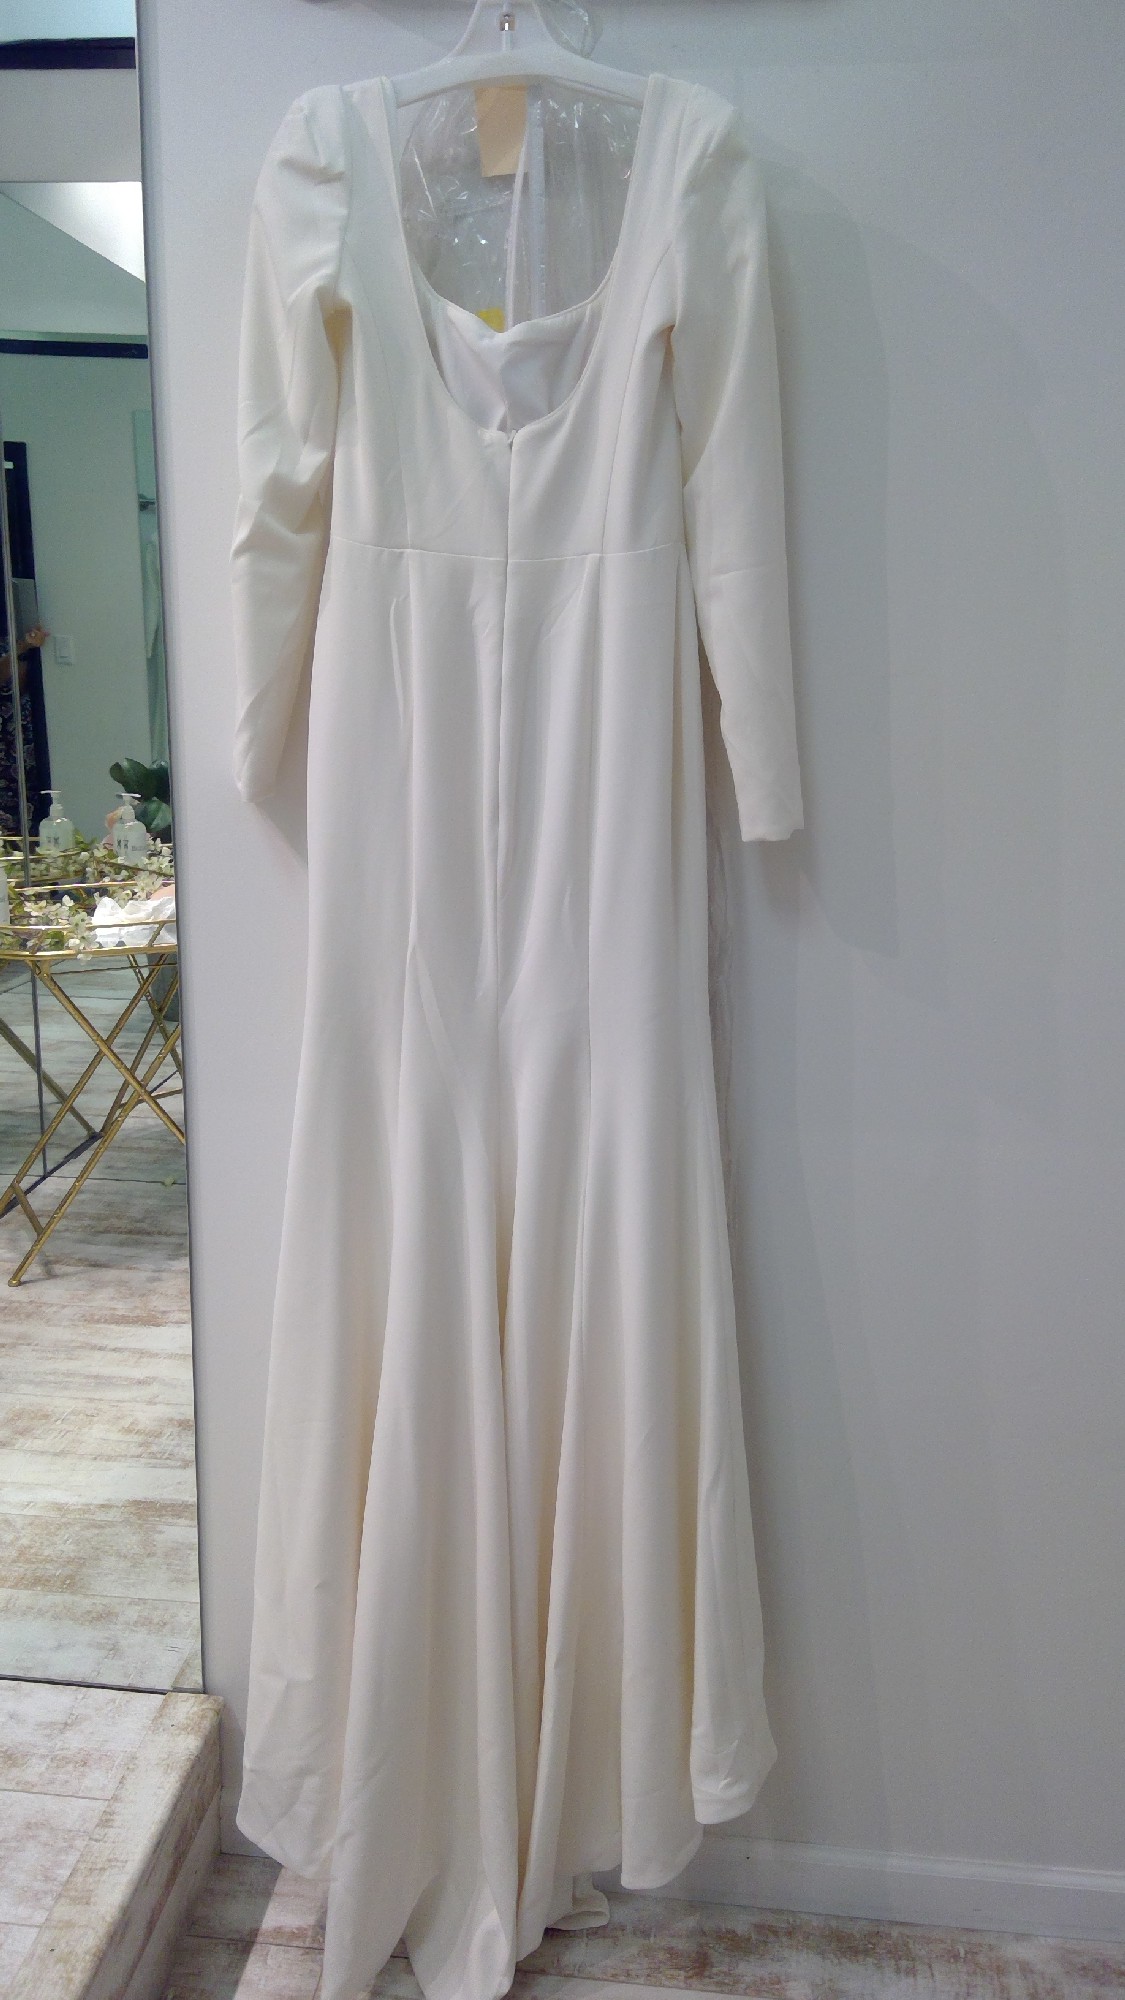 Milla Nova Paige New Wedding Dress Save 40% - Stillwhite